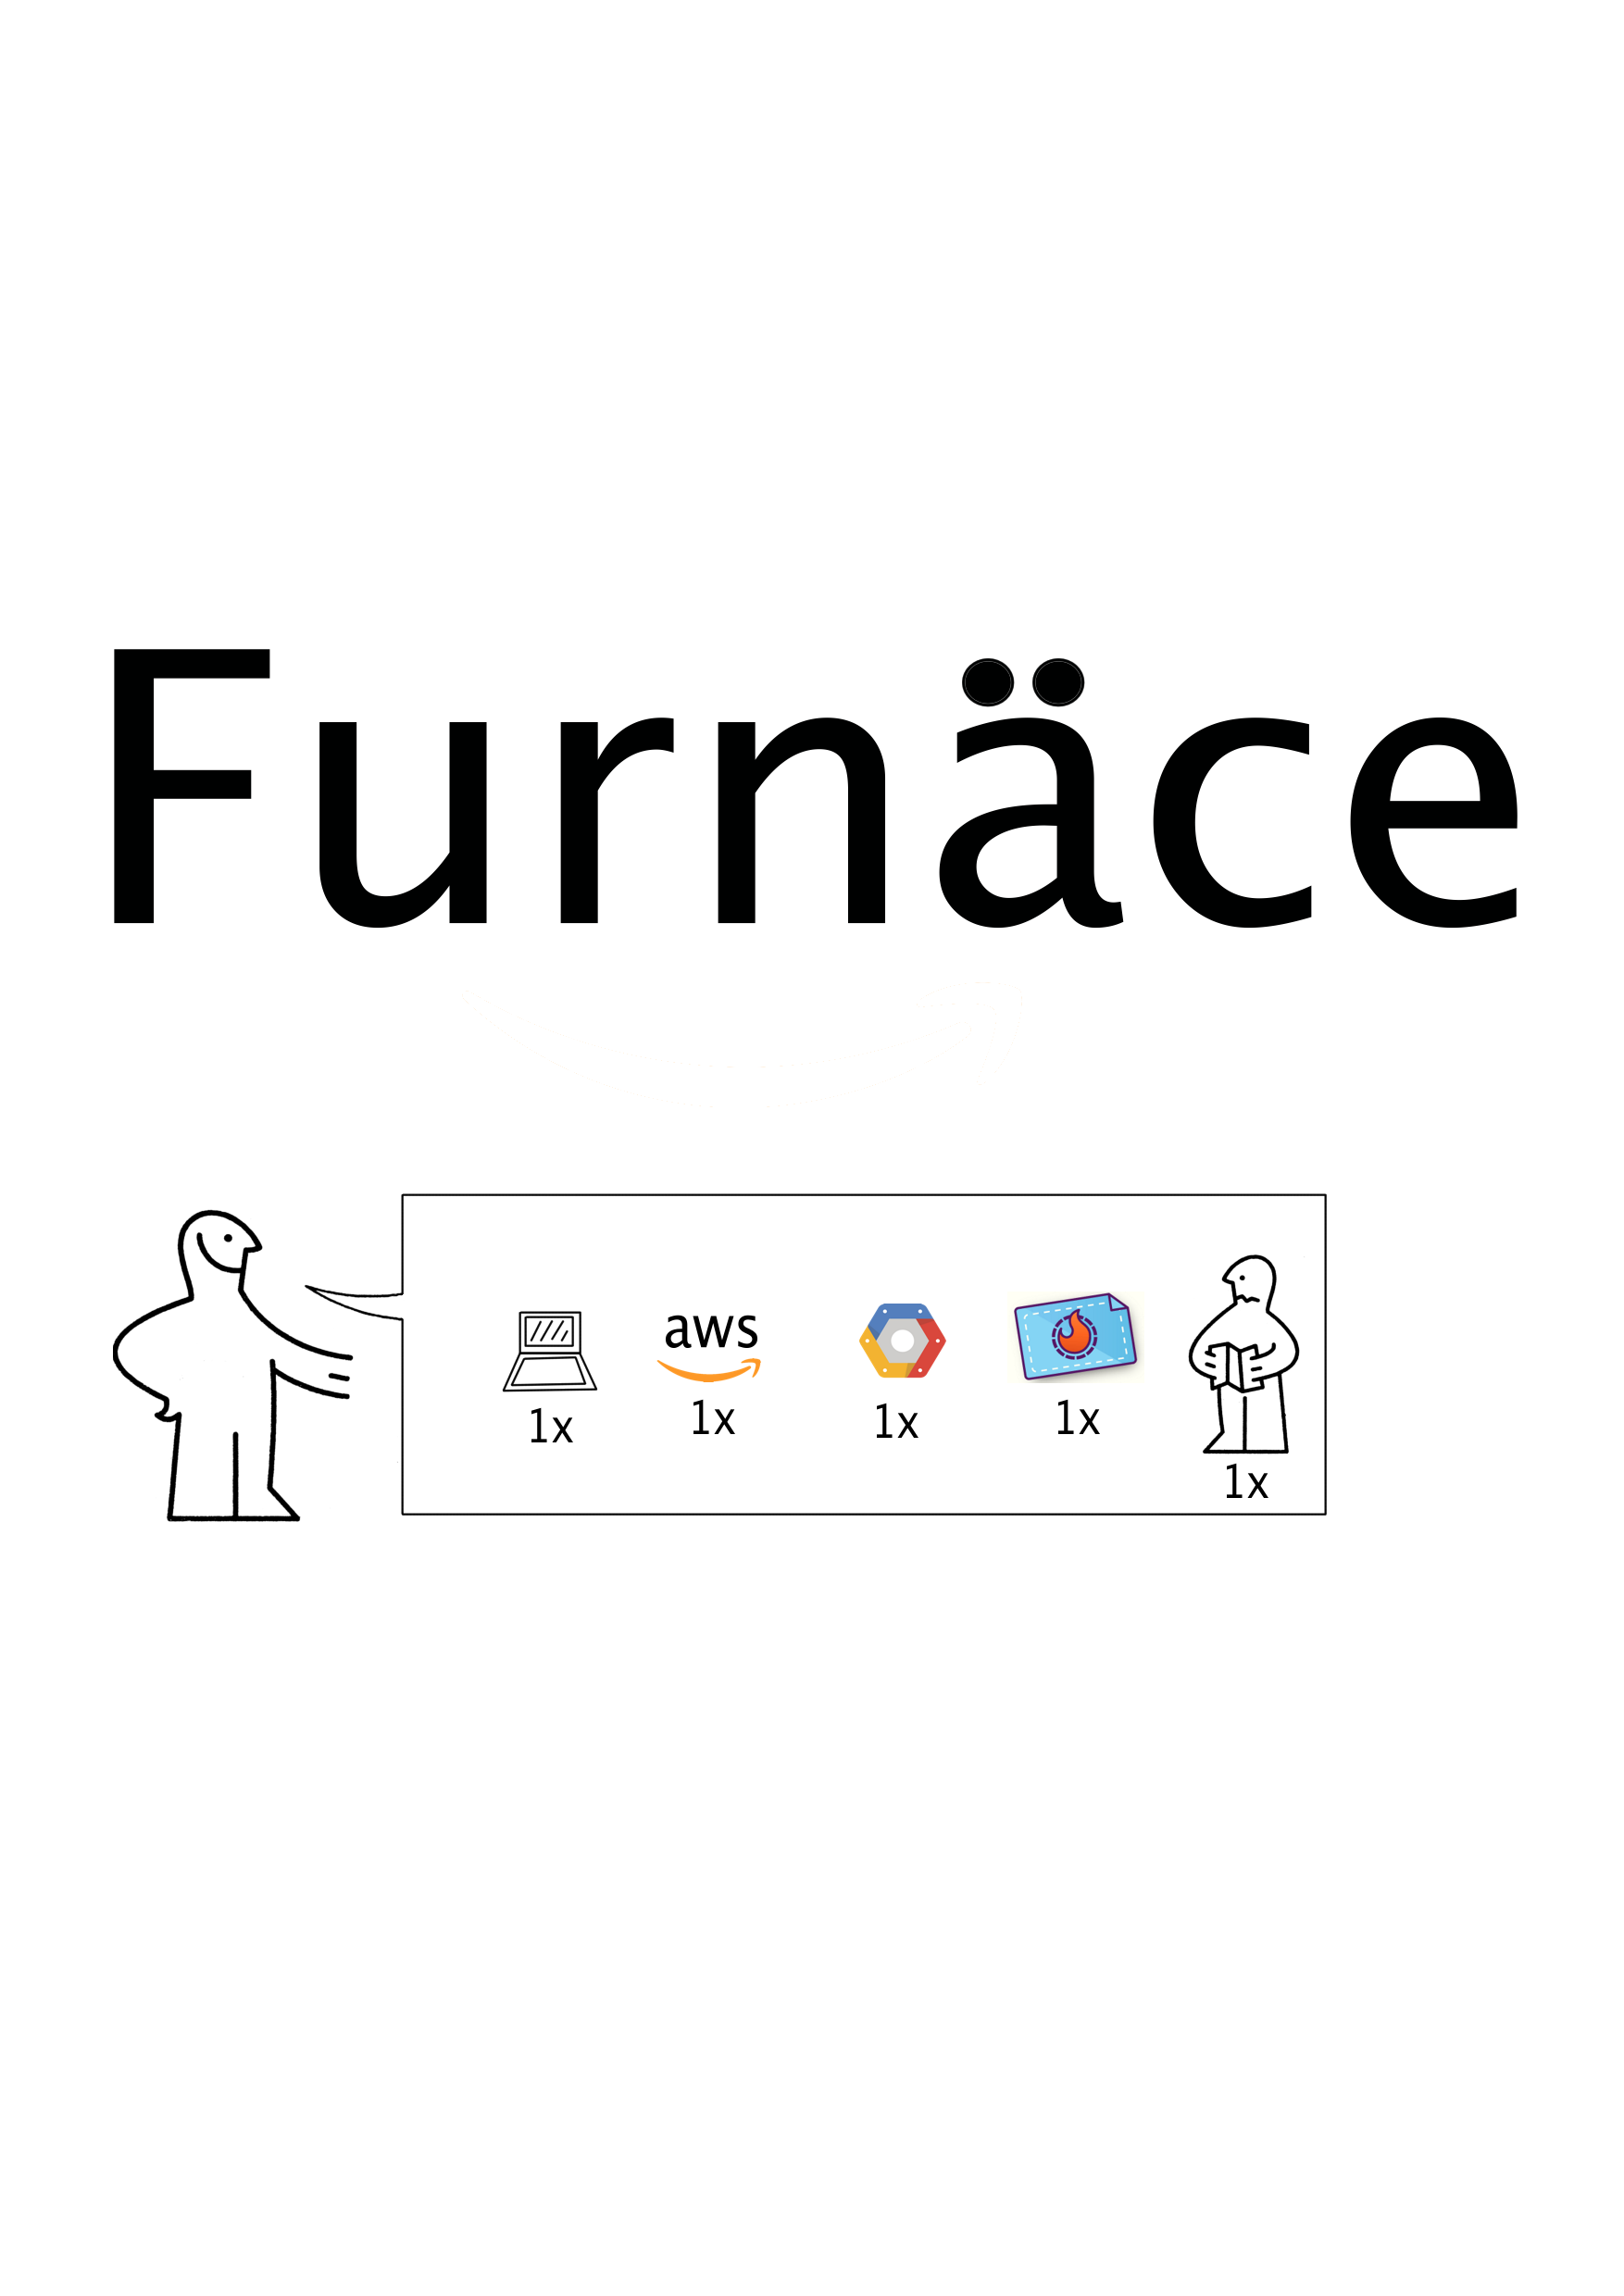 Furnace1